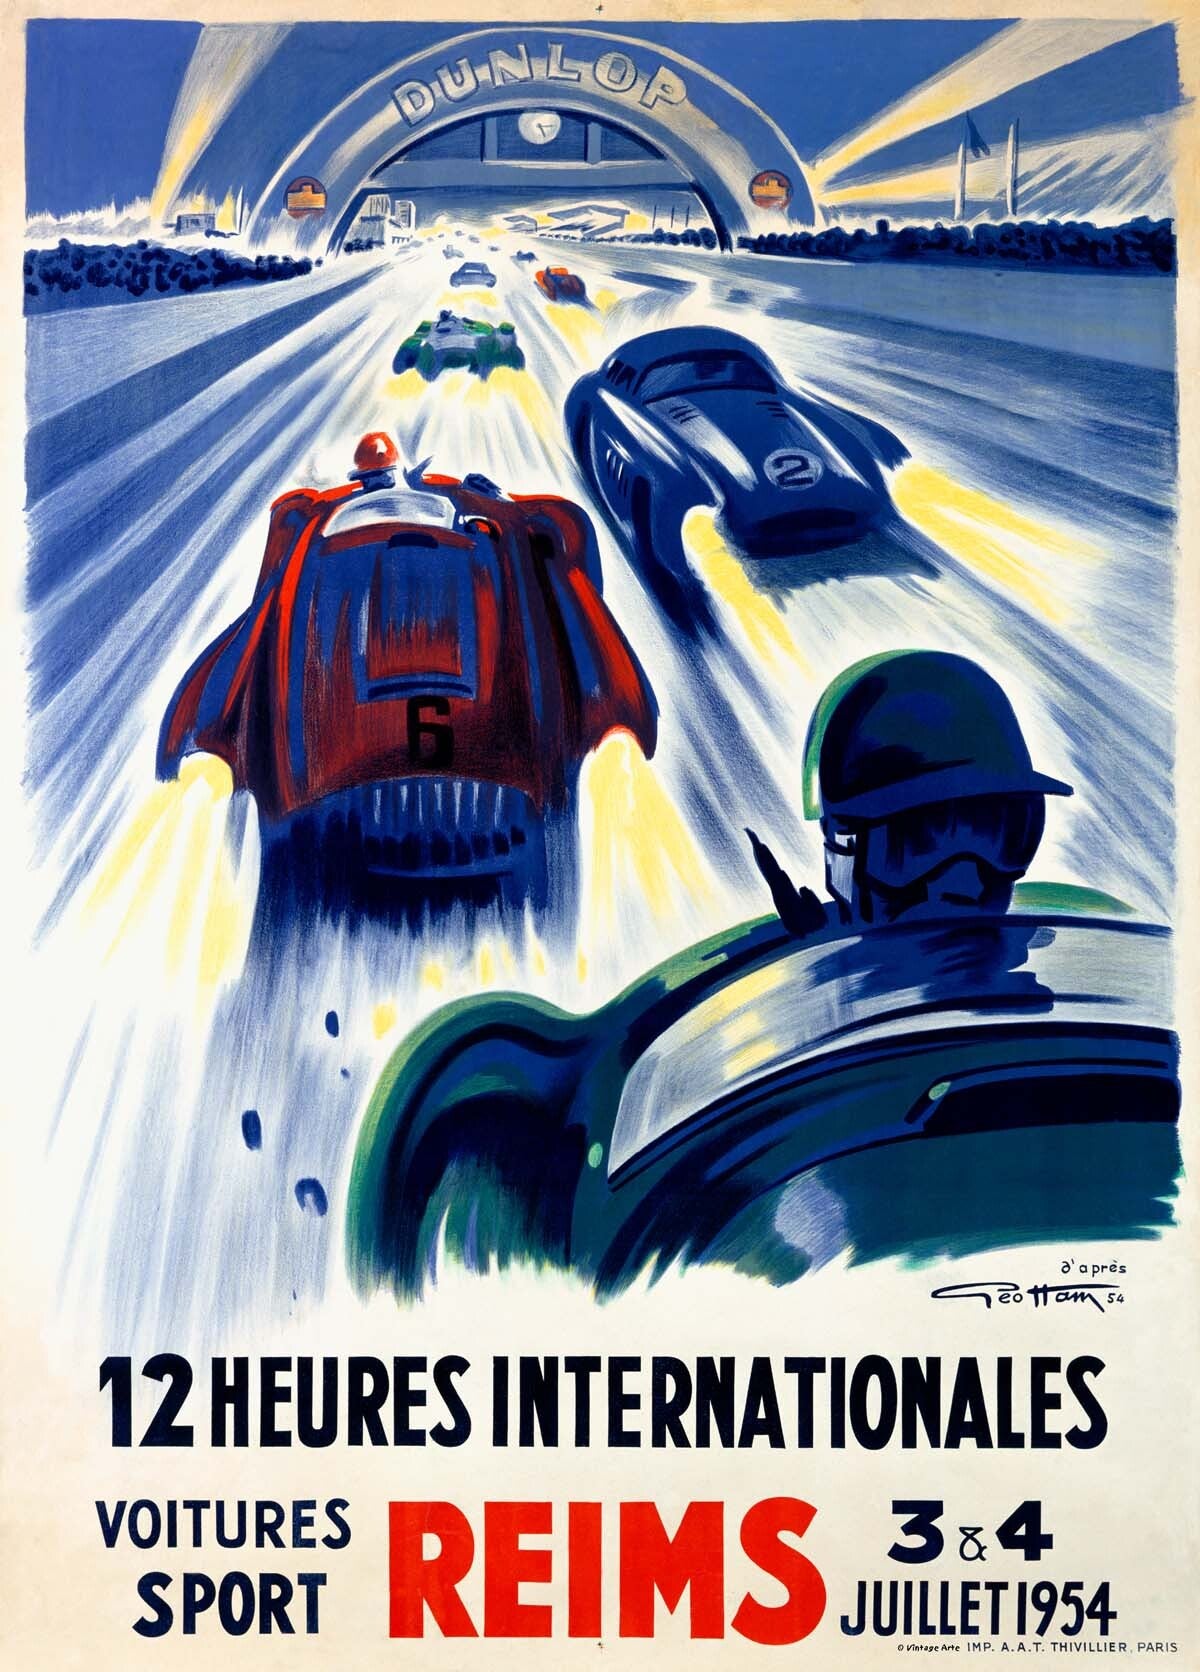 12 Heures International Reims, 1954 0000-0743